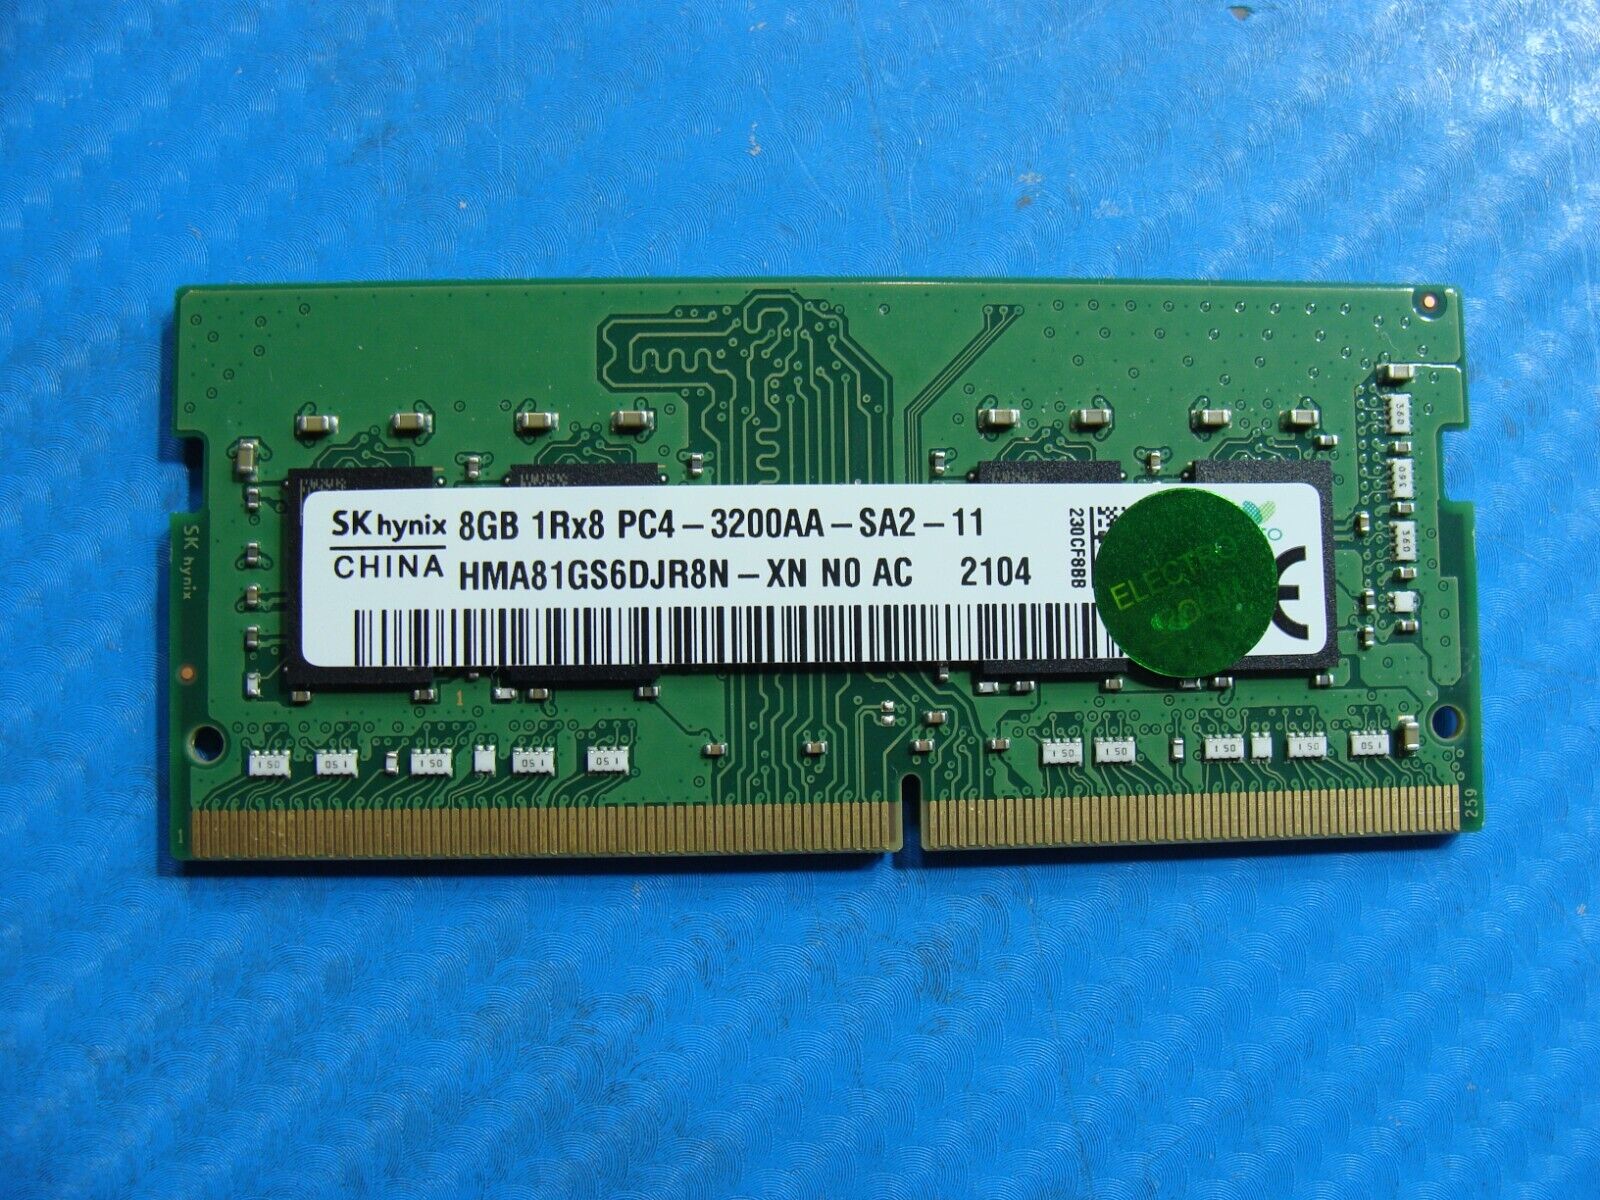 Lenovo E15 Gen 3 SKHynix 8GB 1Rx8 PC4-3200AA Memory RAM SO-DIMM HMA81GS6DJR8N-XN